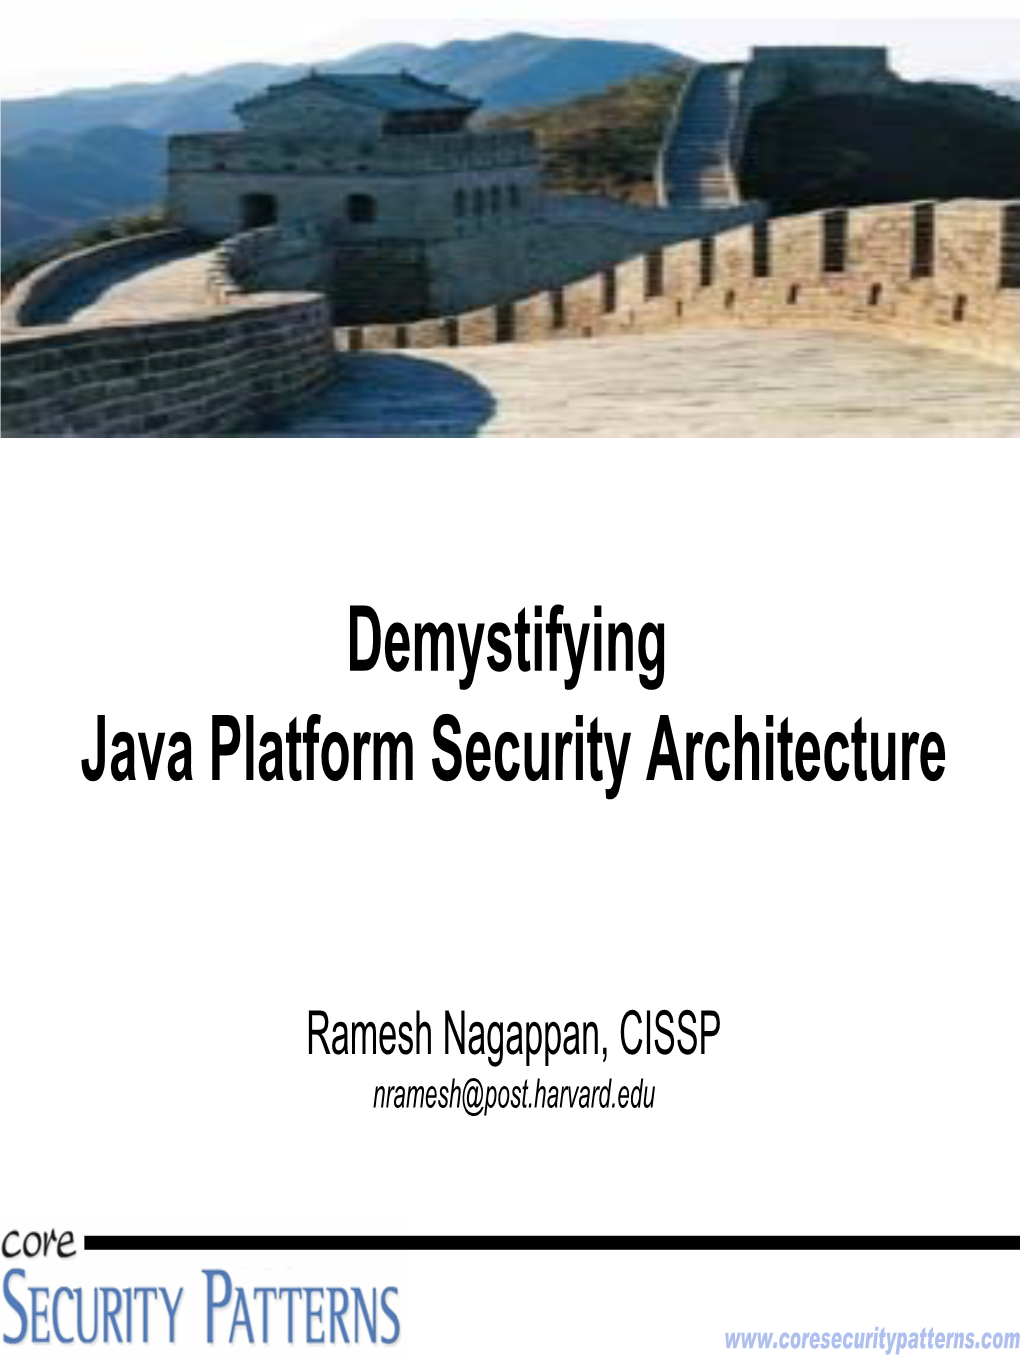 Demystifying Java Platform Security Architecture